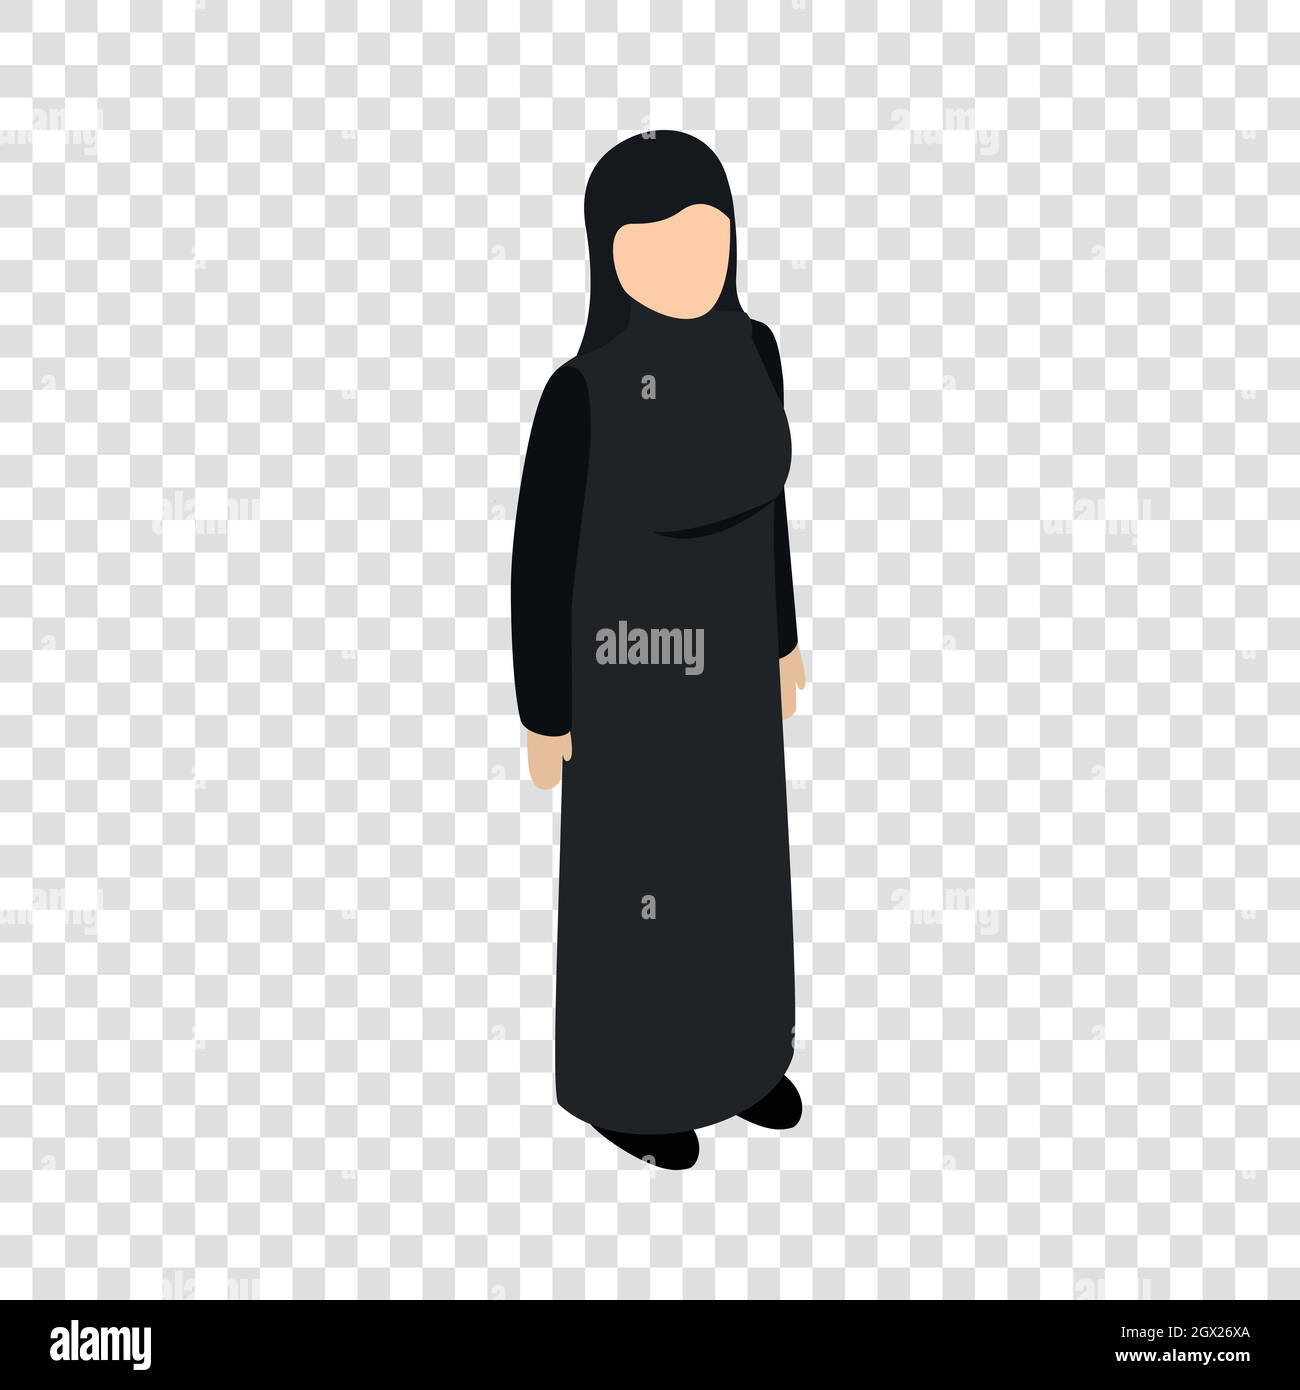 Arab woman isometric icon Stock Vector